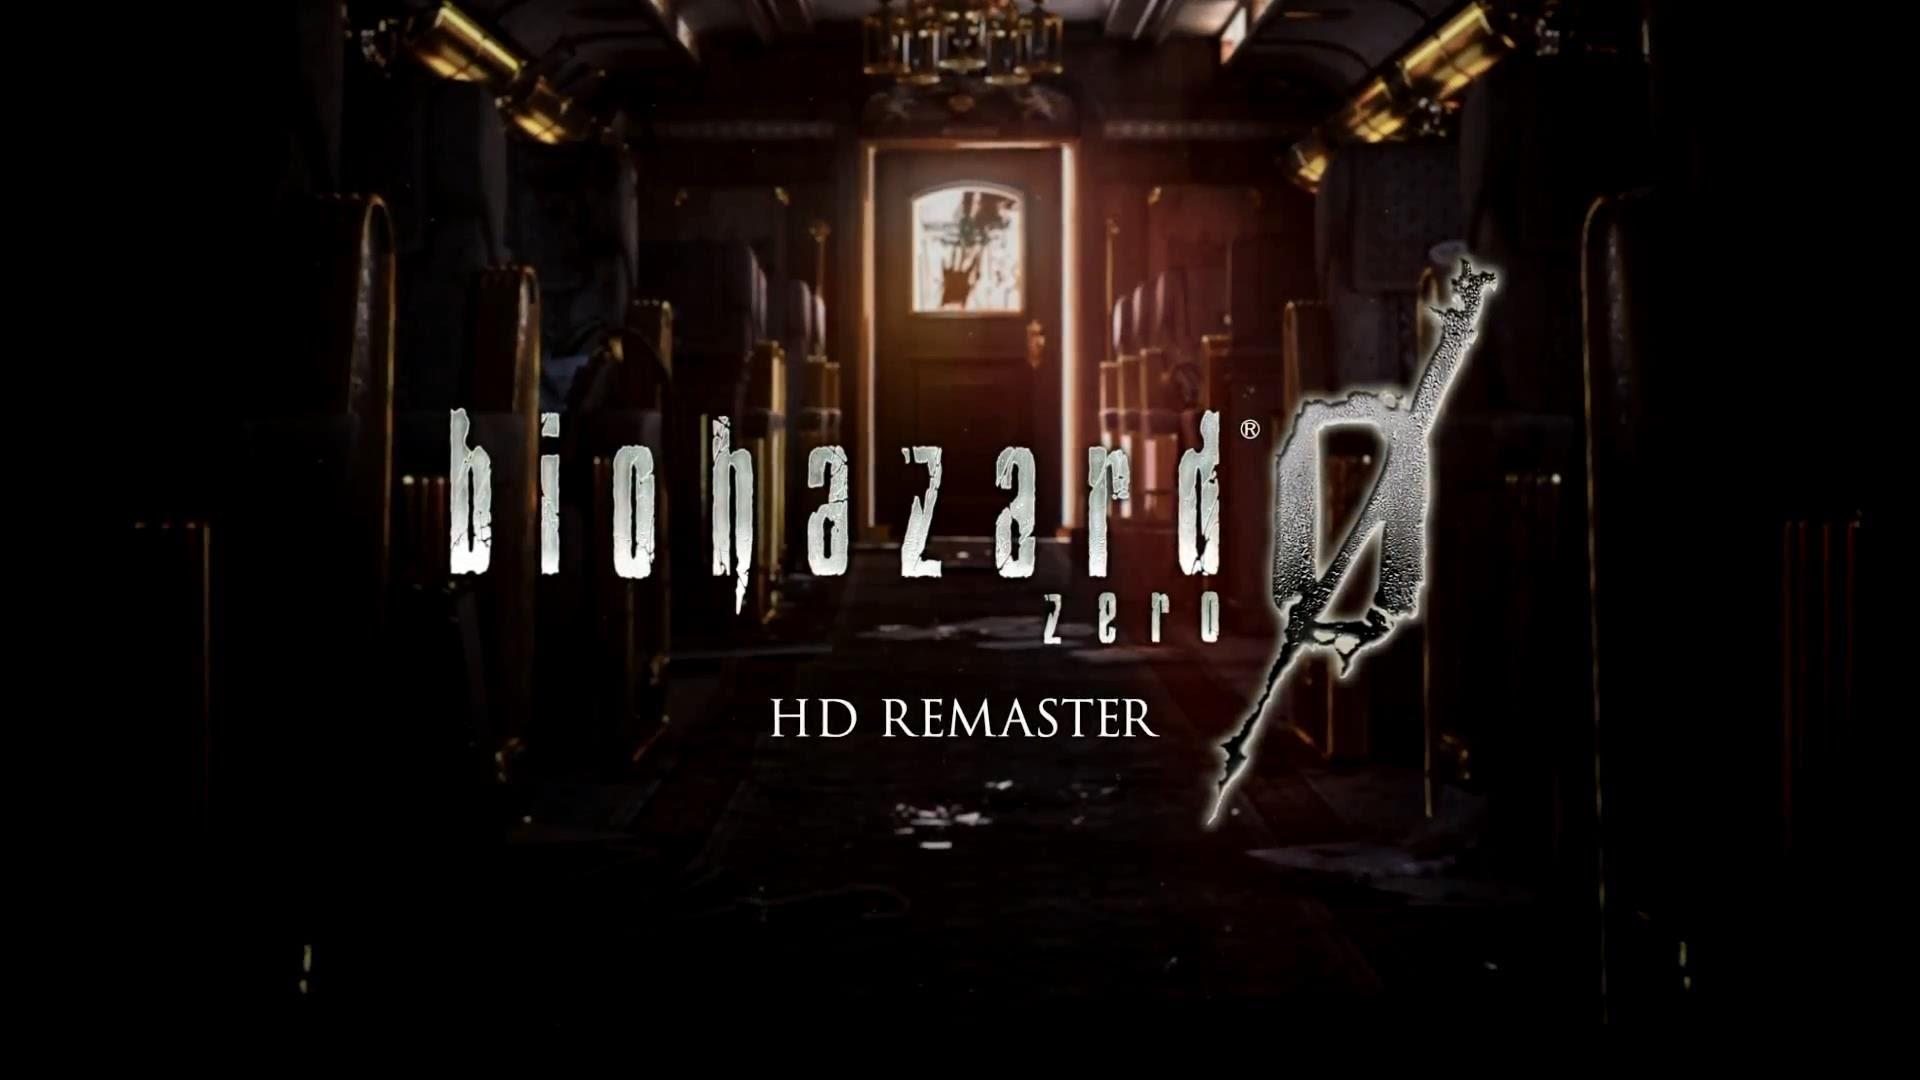 REVIEW: Resident Evil Zero HD Remaster